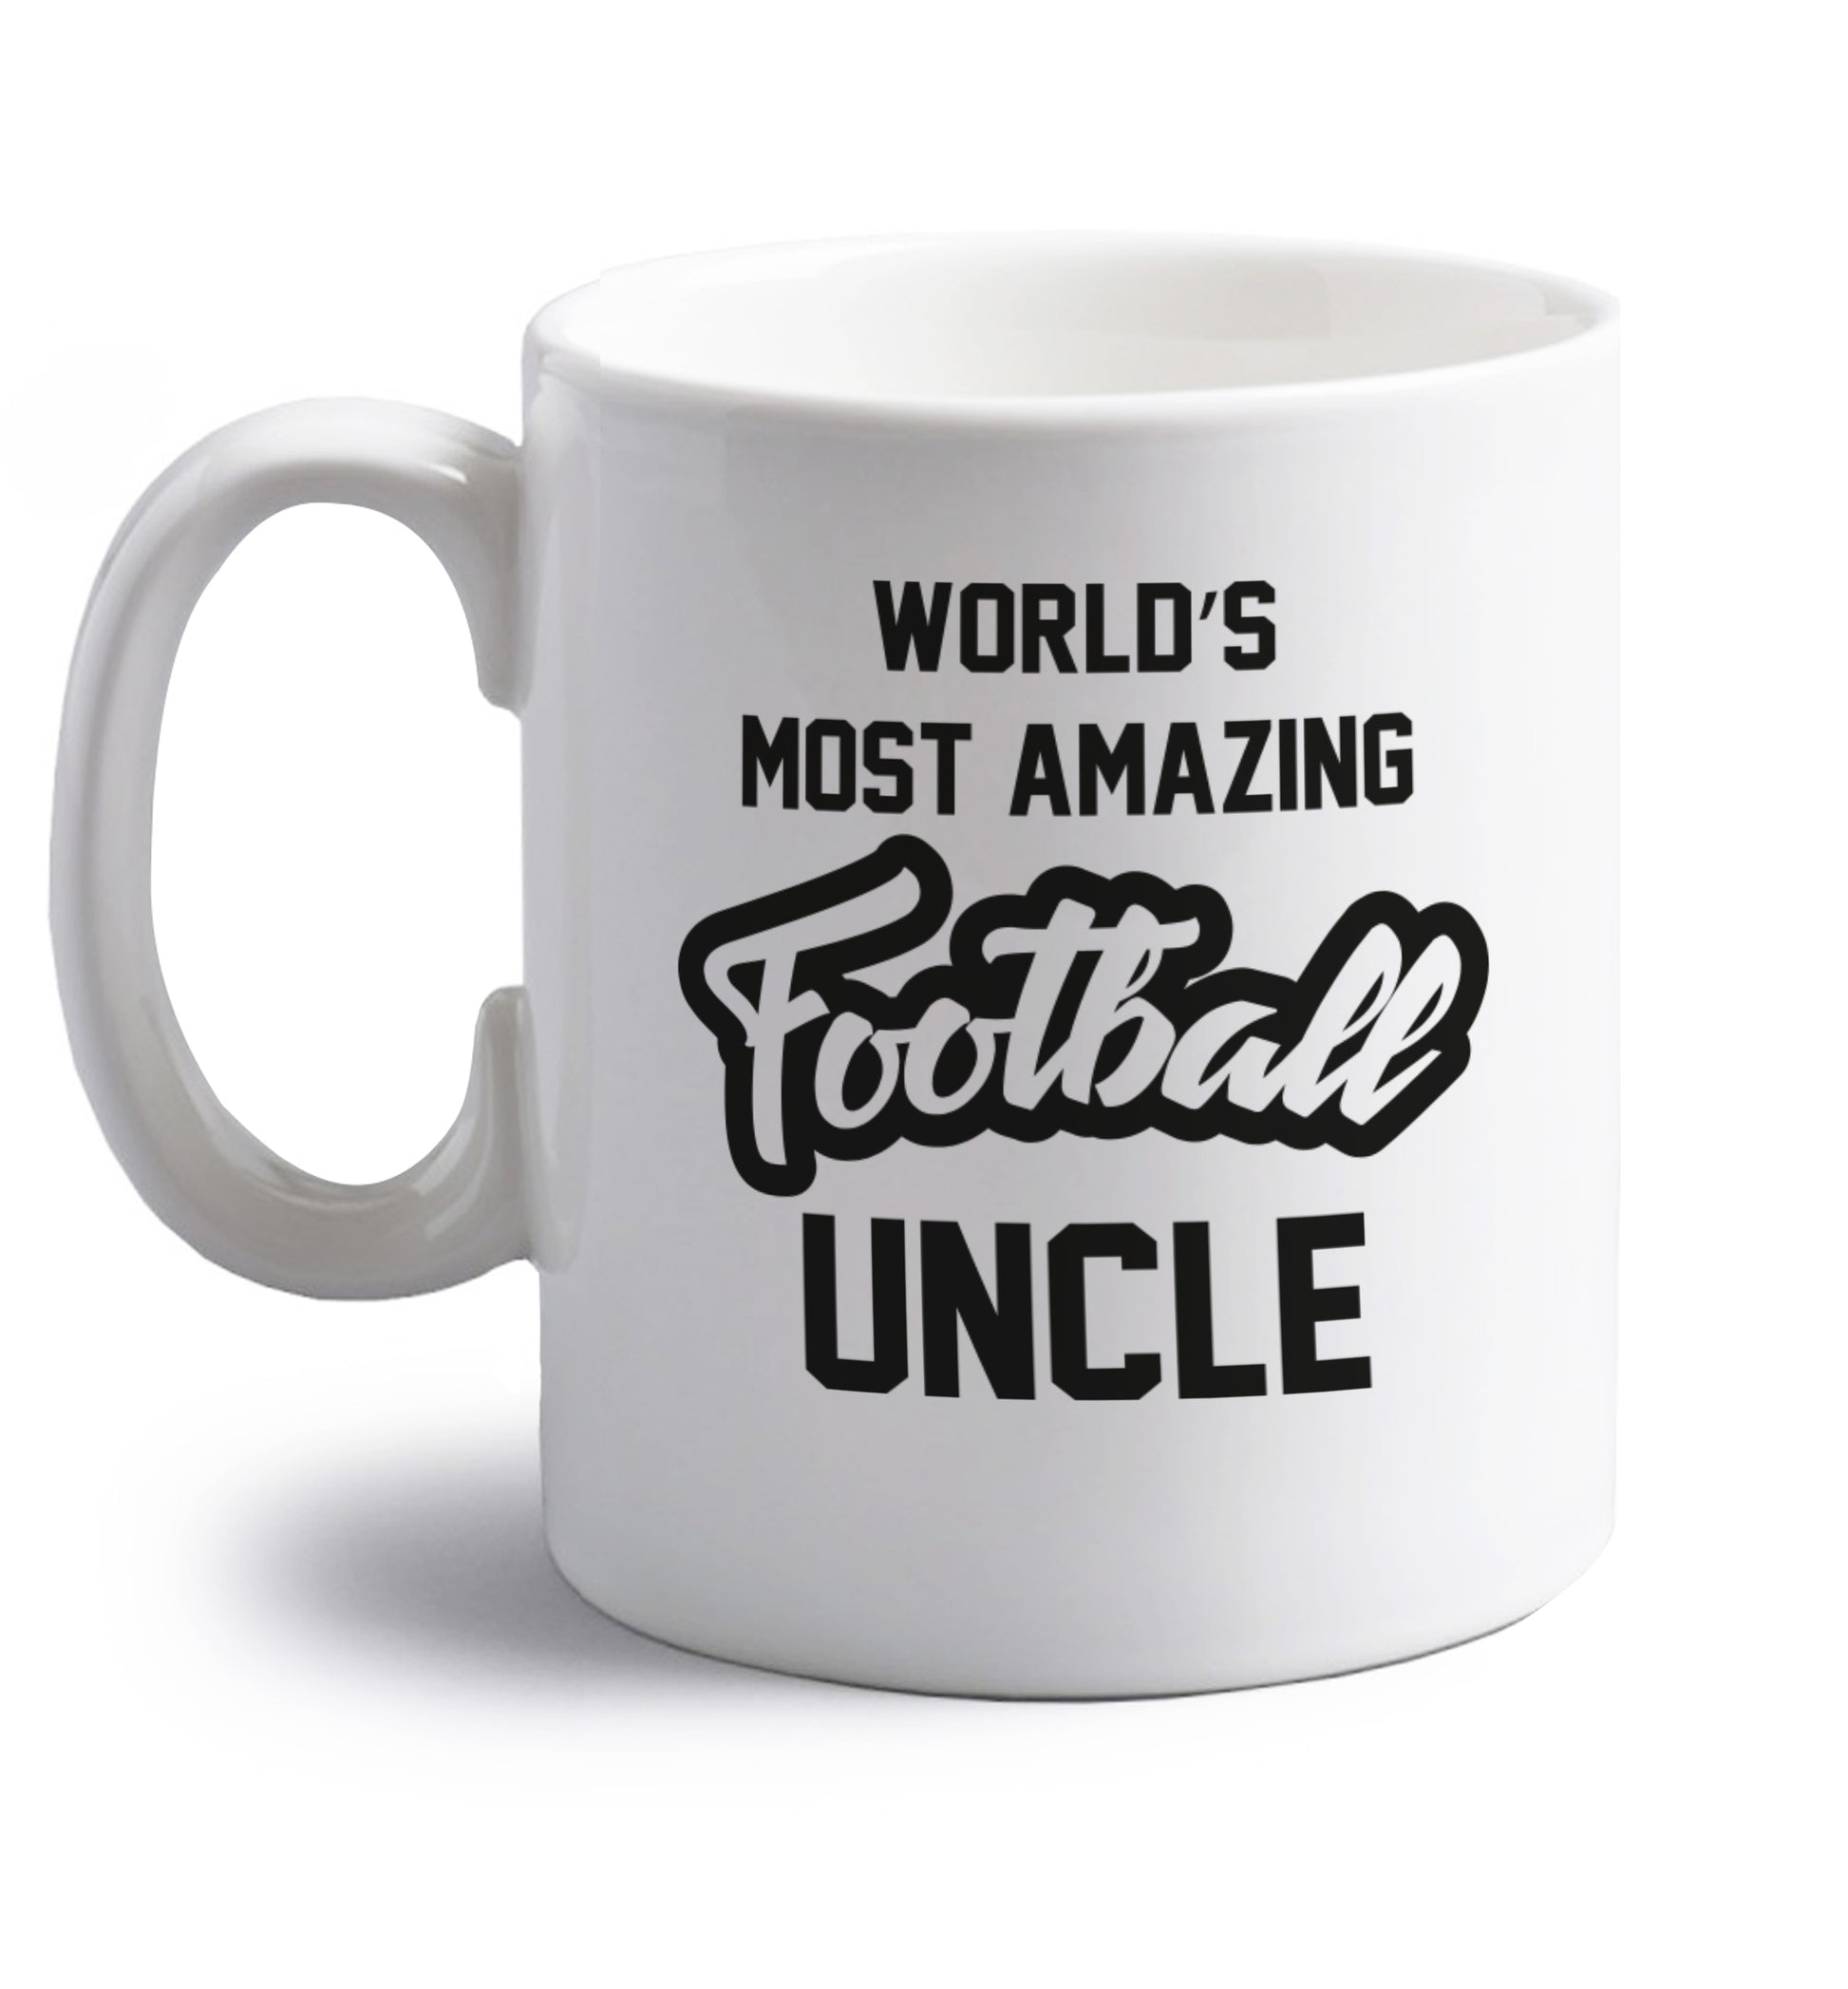 Worlds most amazing football uncle right handed white ceramic mug 